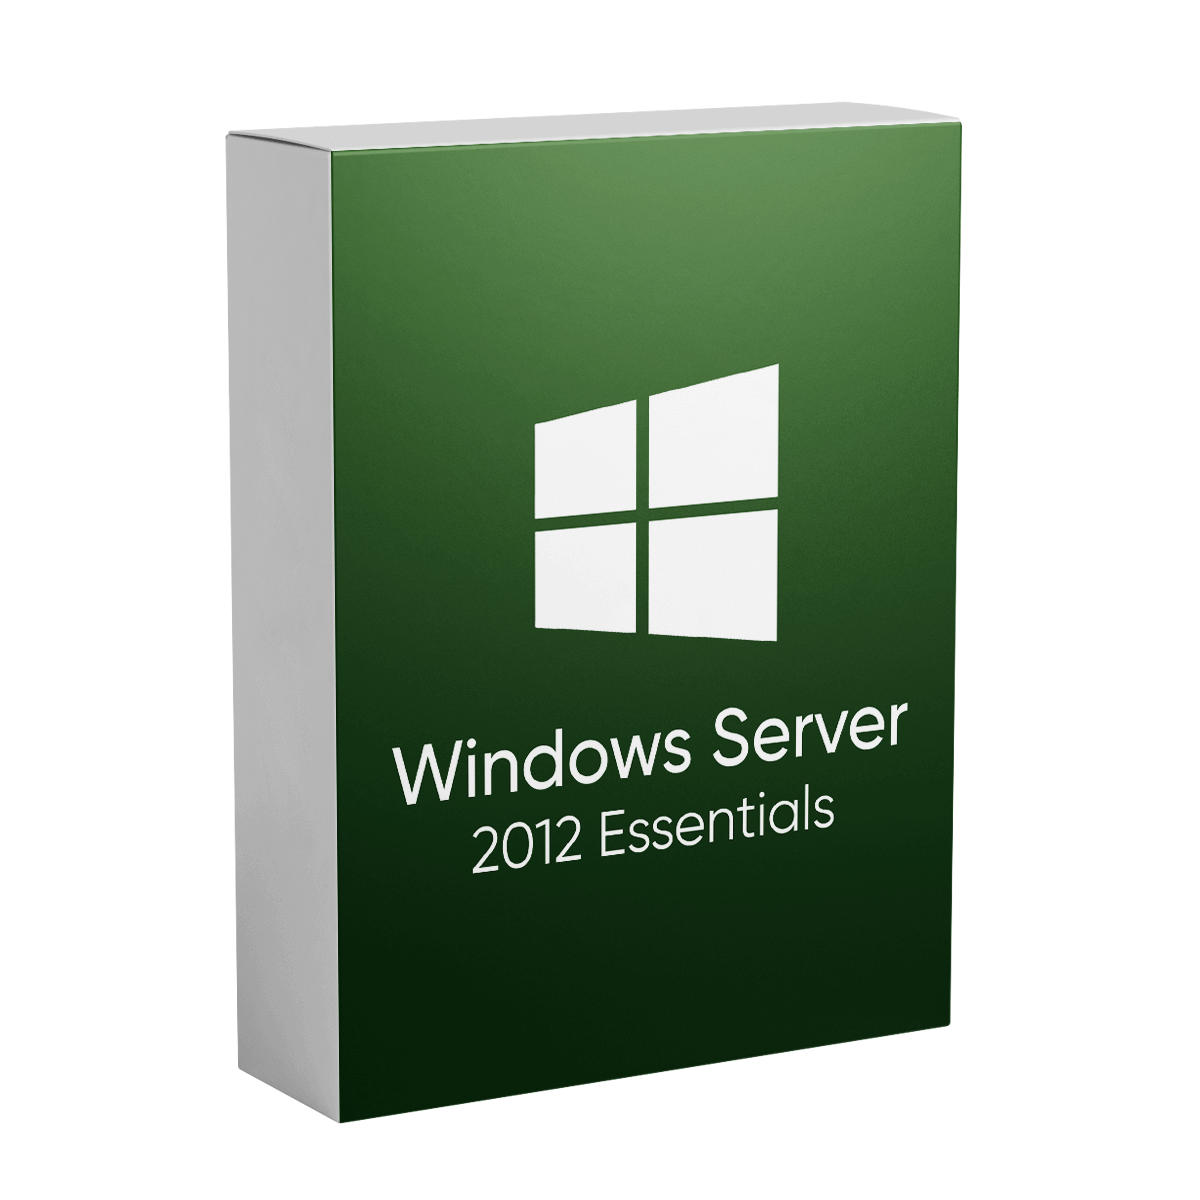 Windows Server 2012 Essentials - Lifetime License for 1 PC